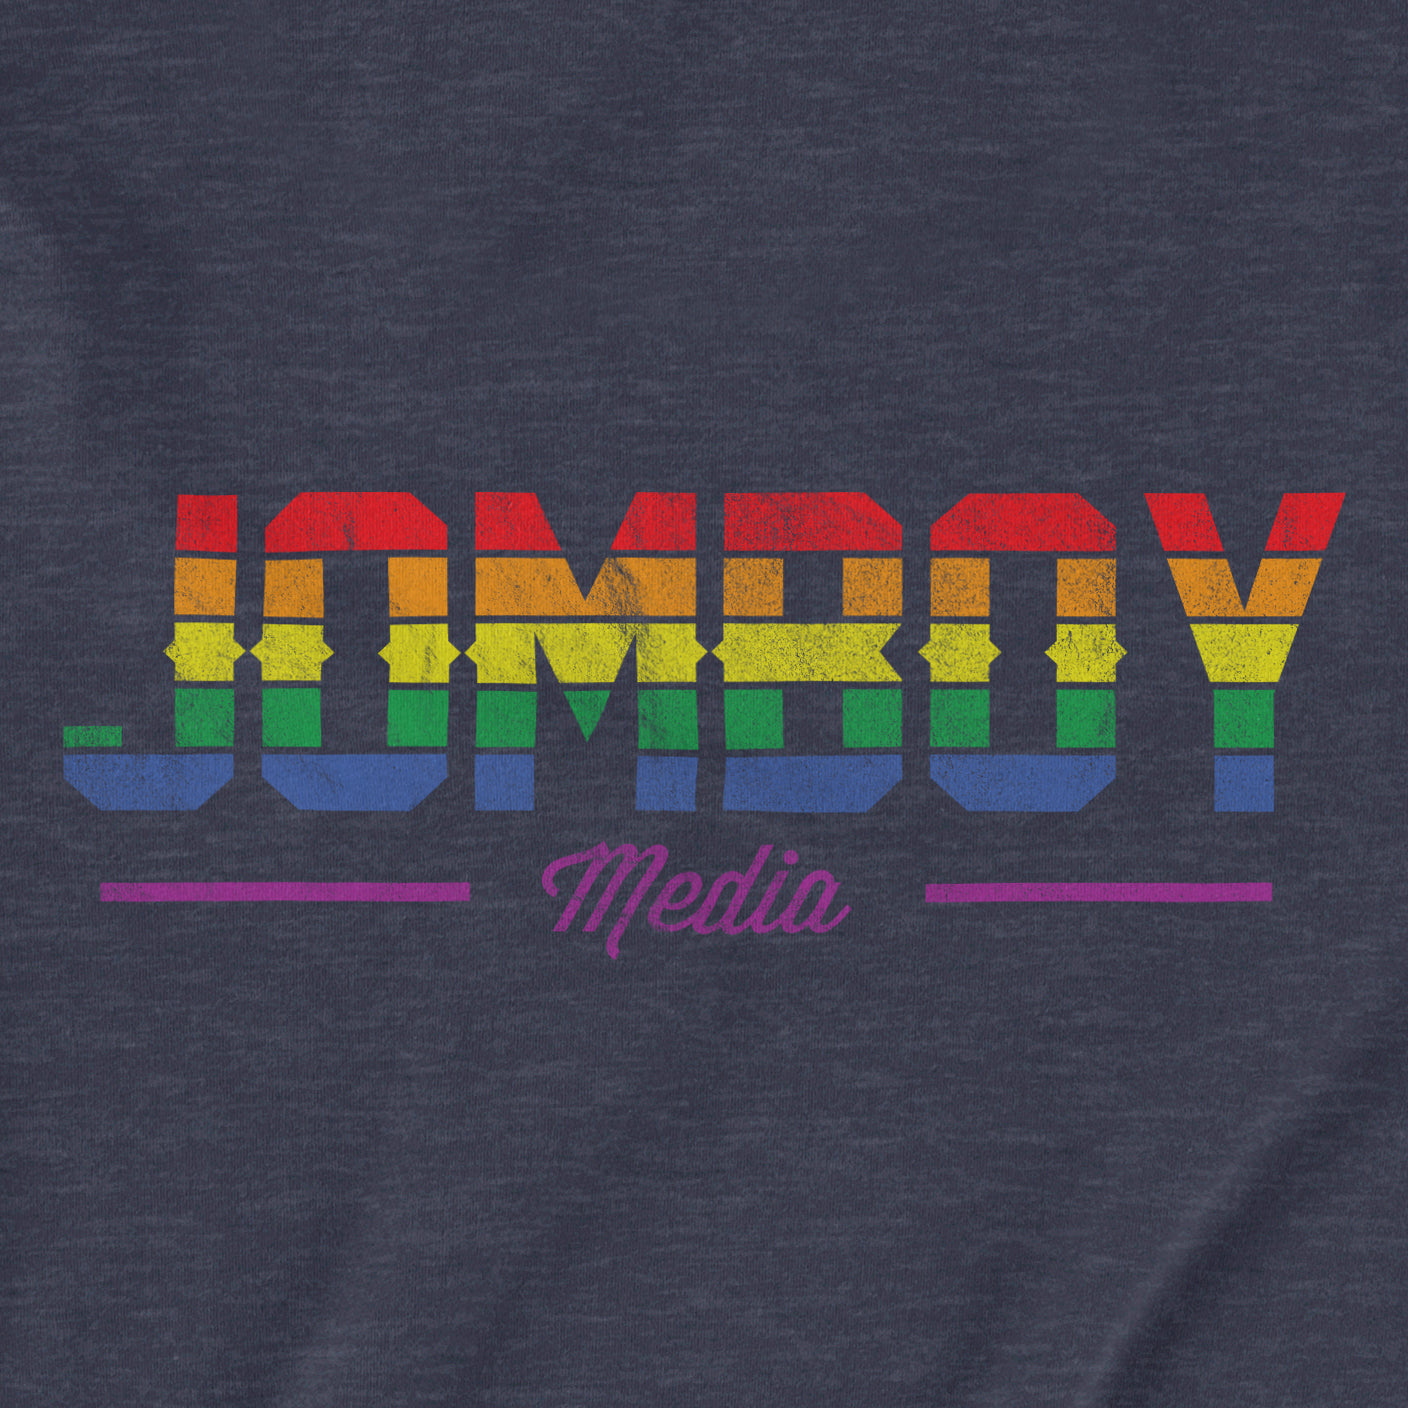 Jomboy Media Pride | T-Shirt